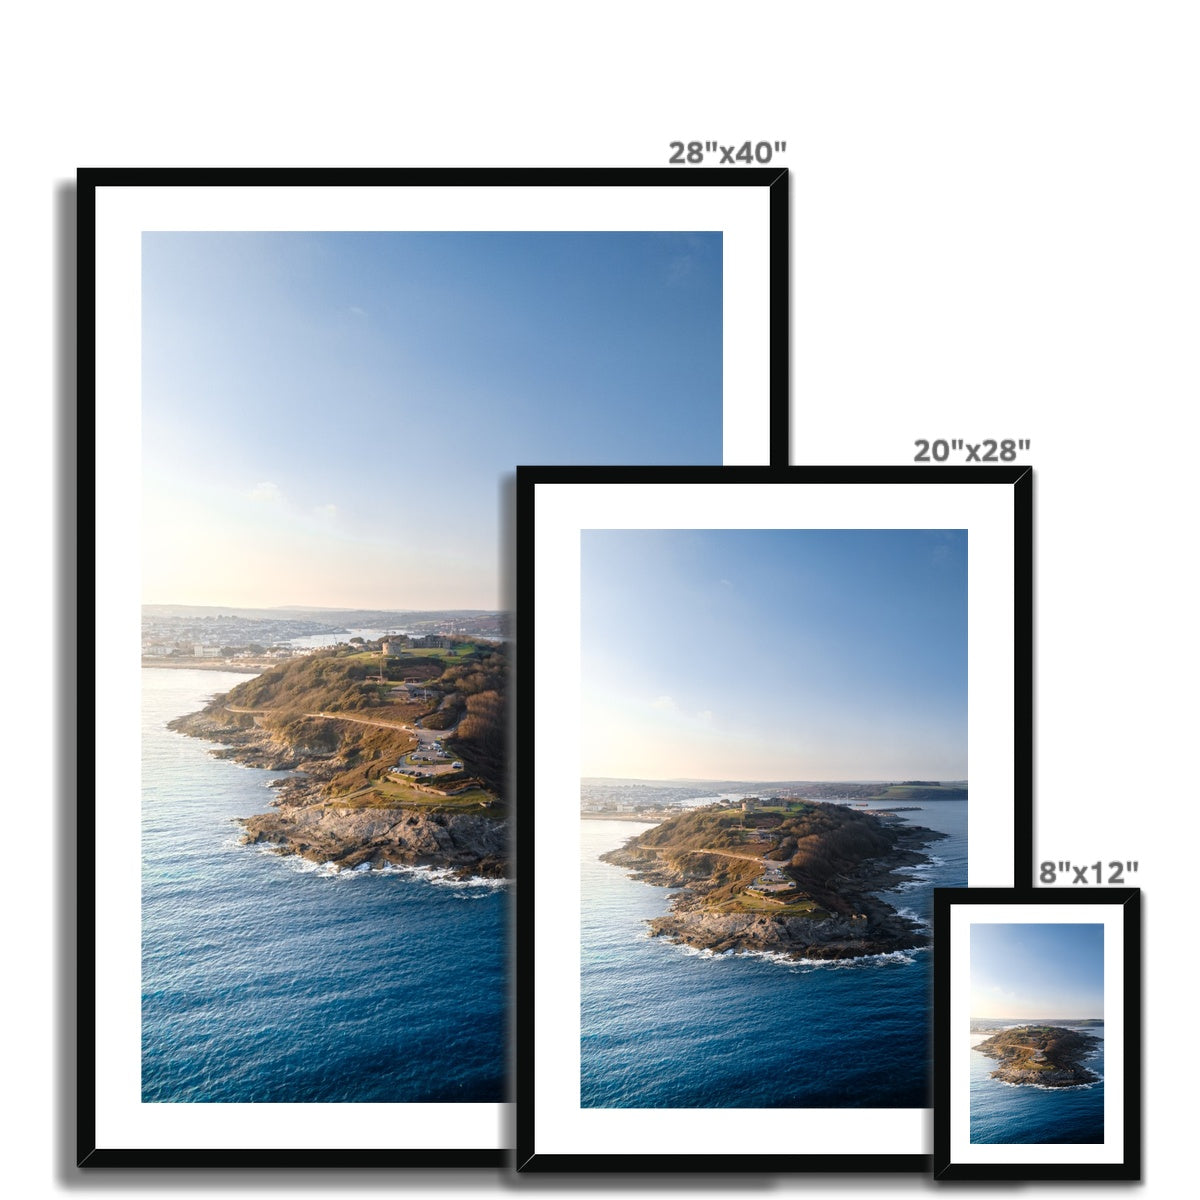 pendennis point portrait frame sizes